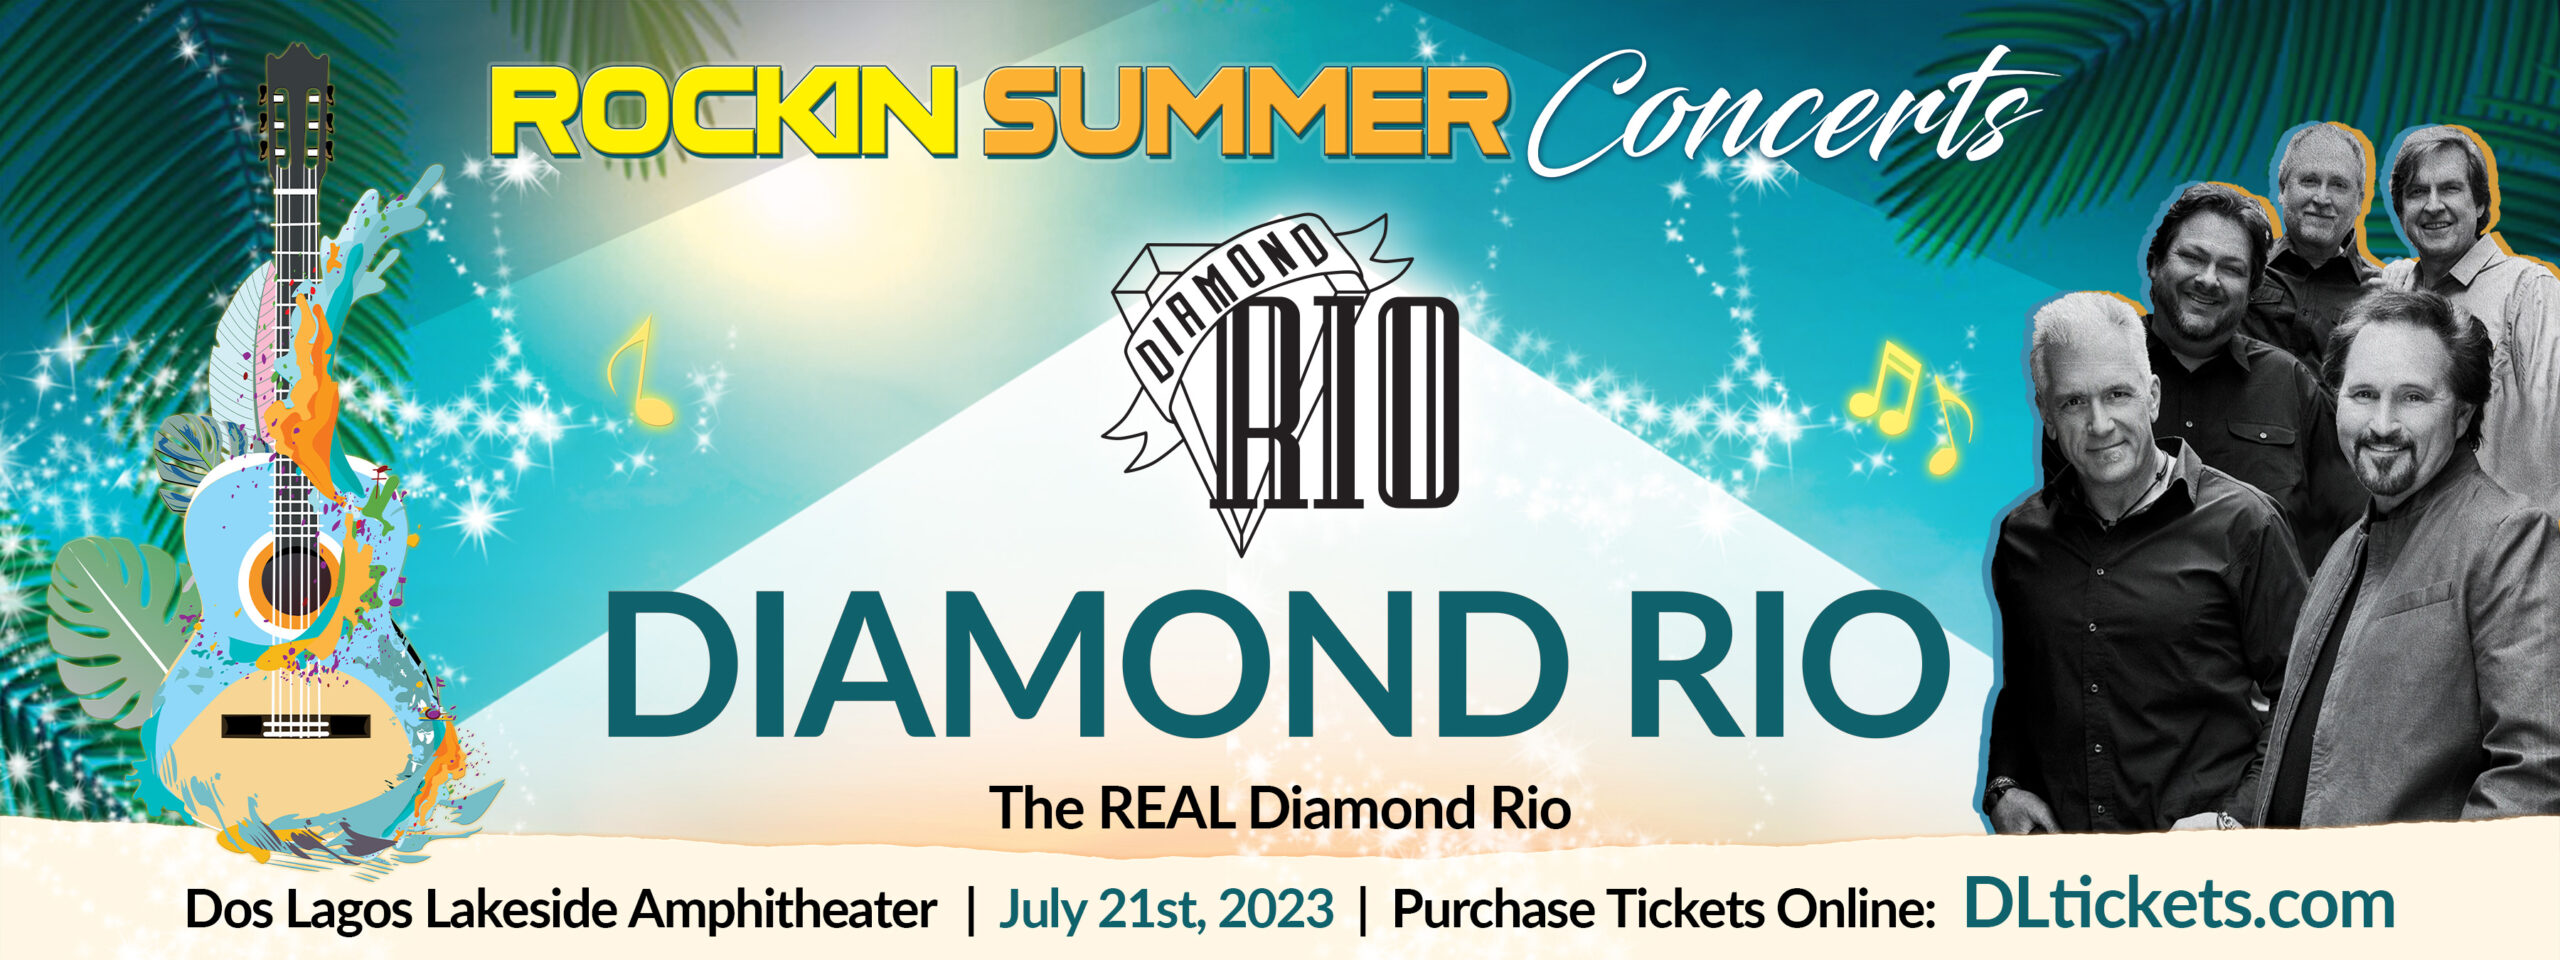 Diamond Rio “Rockin Summer Concerts” Inland Empire Magazine